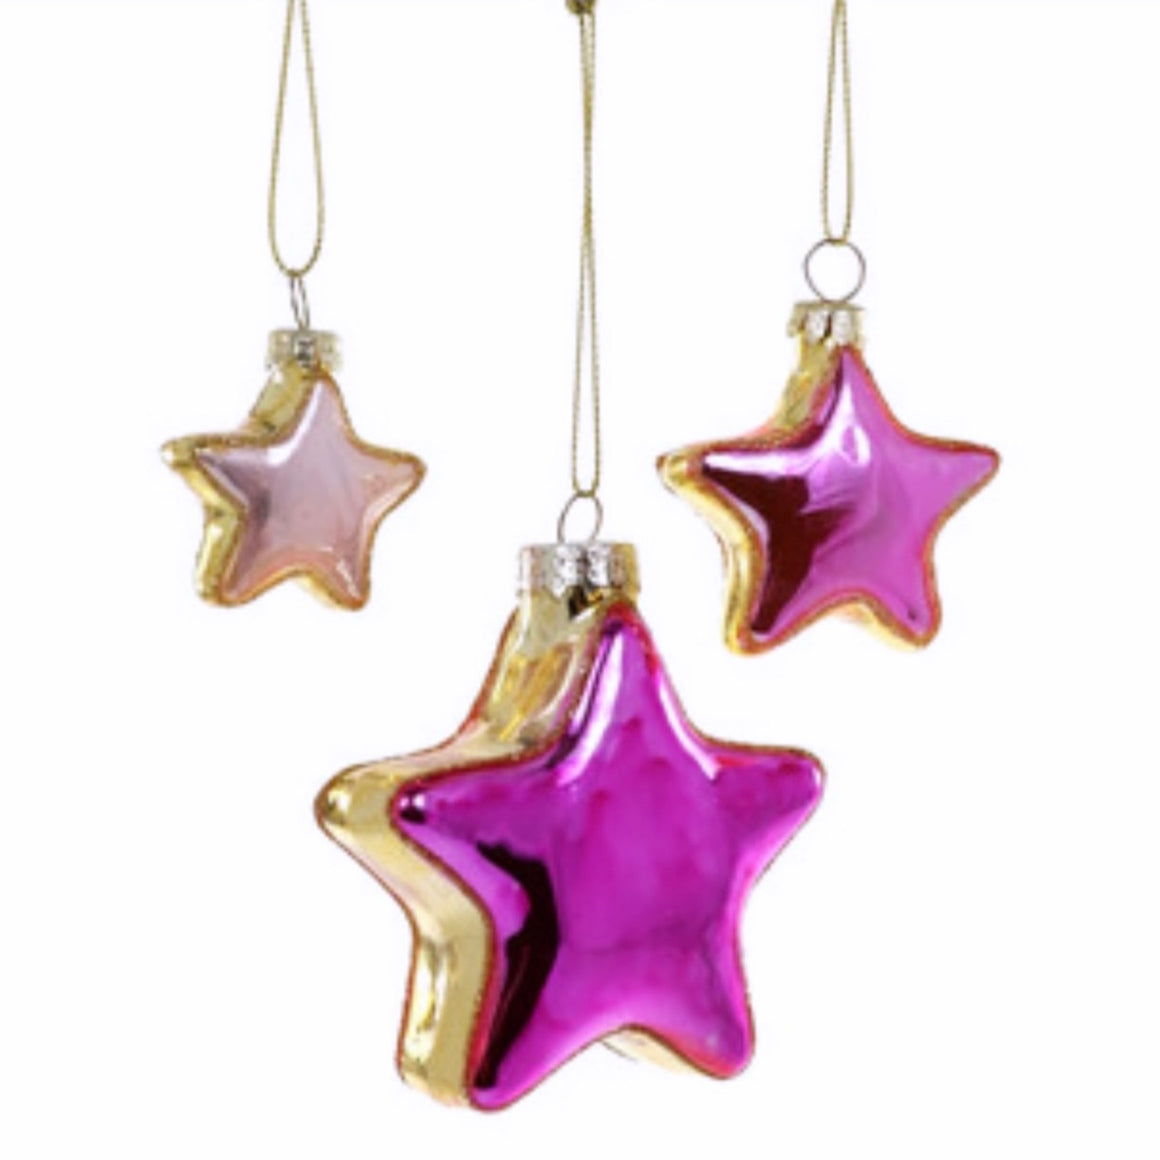 HEIRLOOM GLASS ORNAMENTS - CODY FOSTER FESTIVE PINK STARS (set of 3)